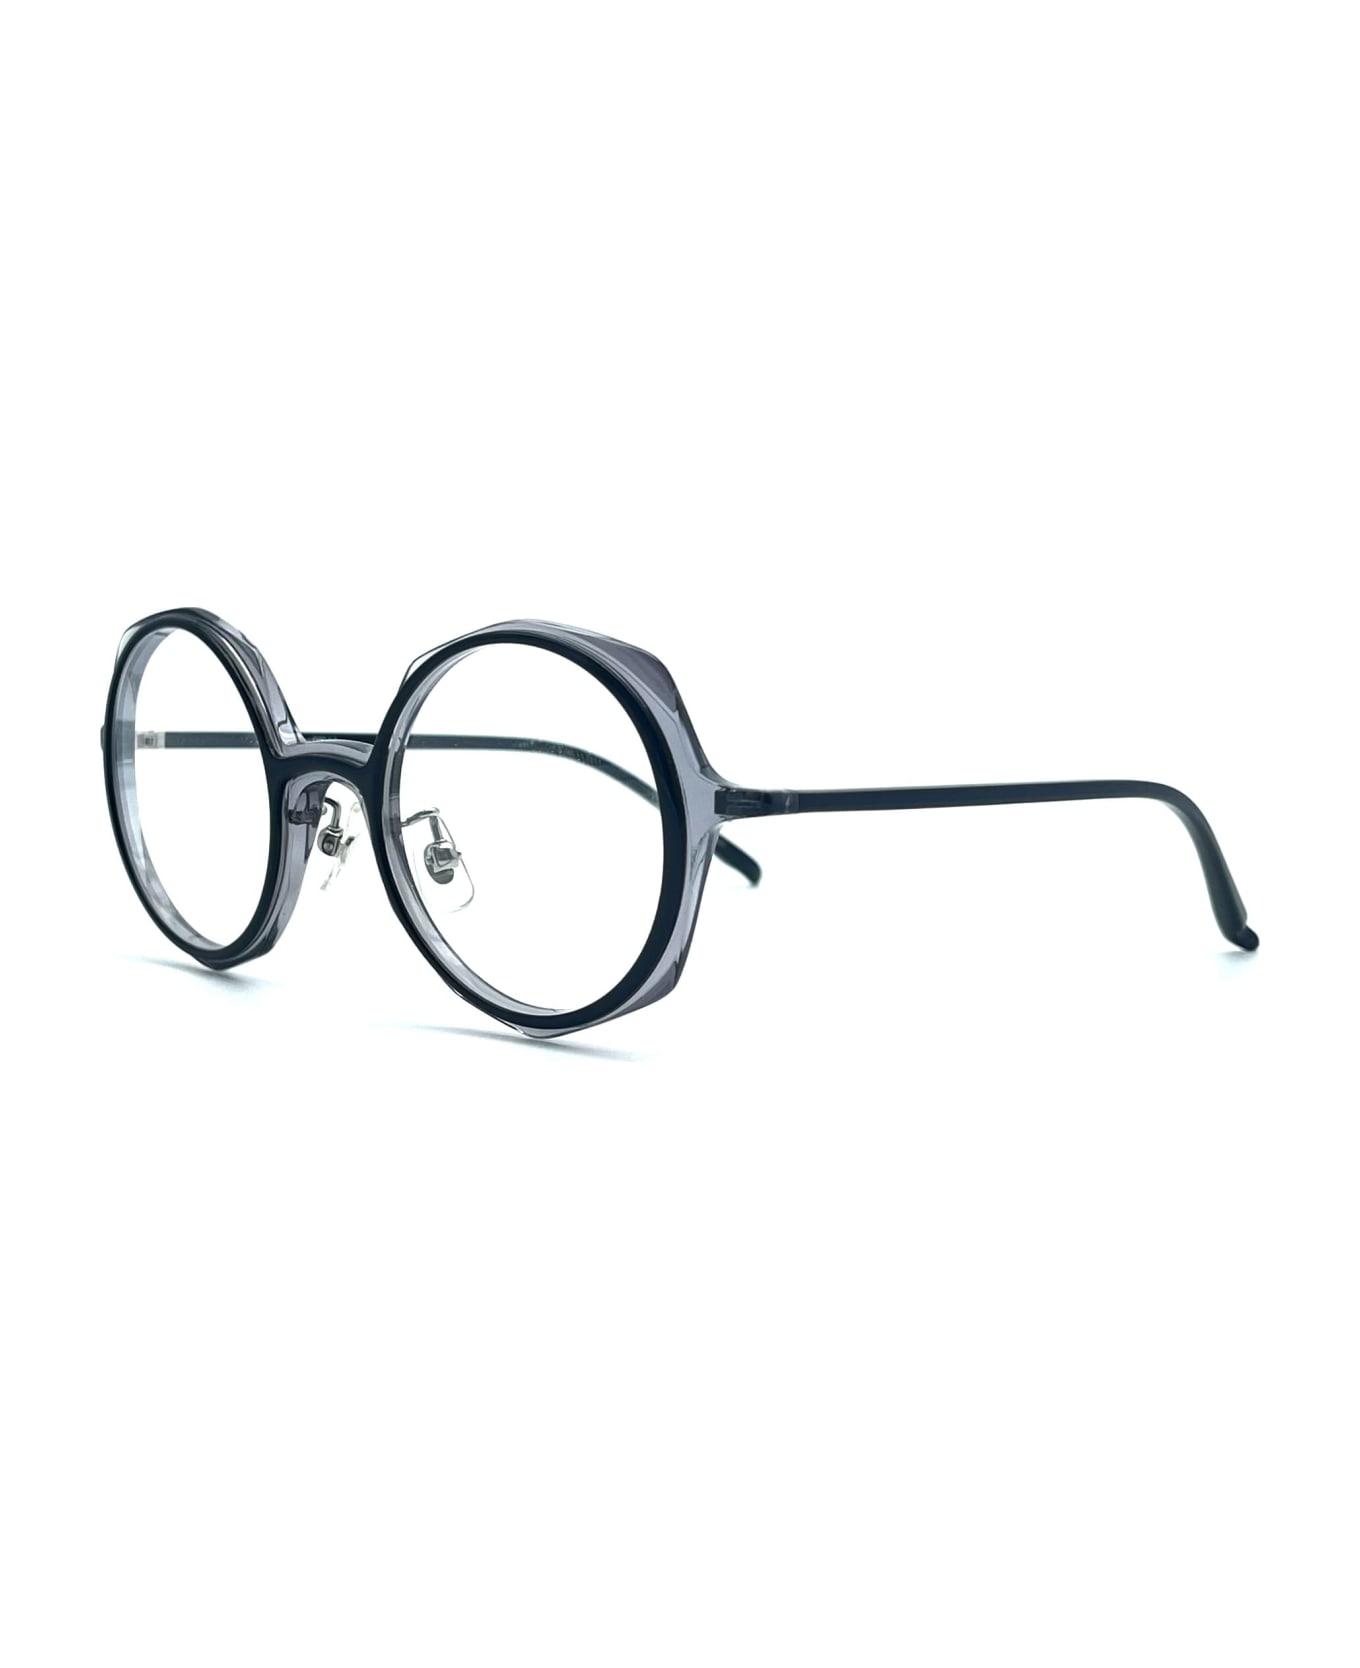 FACTORY900 Fa 1152-39 Glasses - Black/Grey